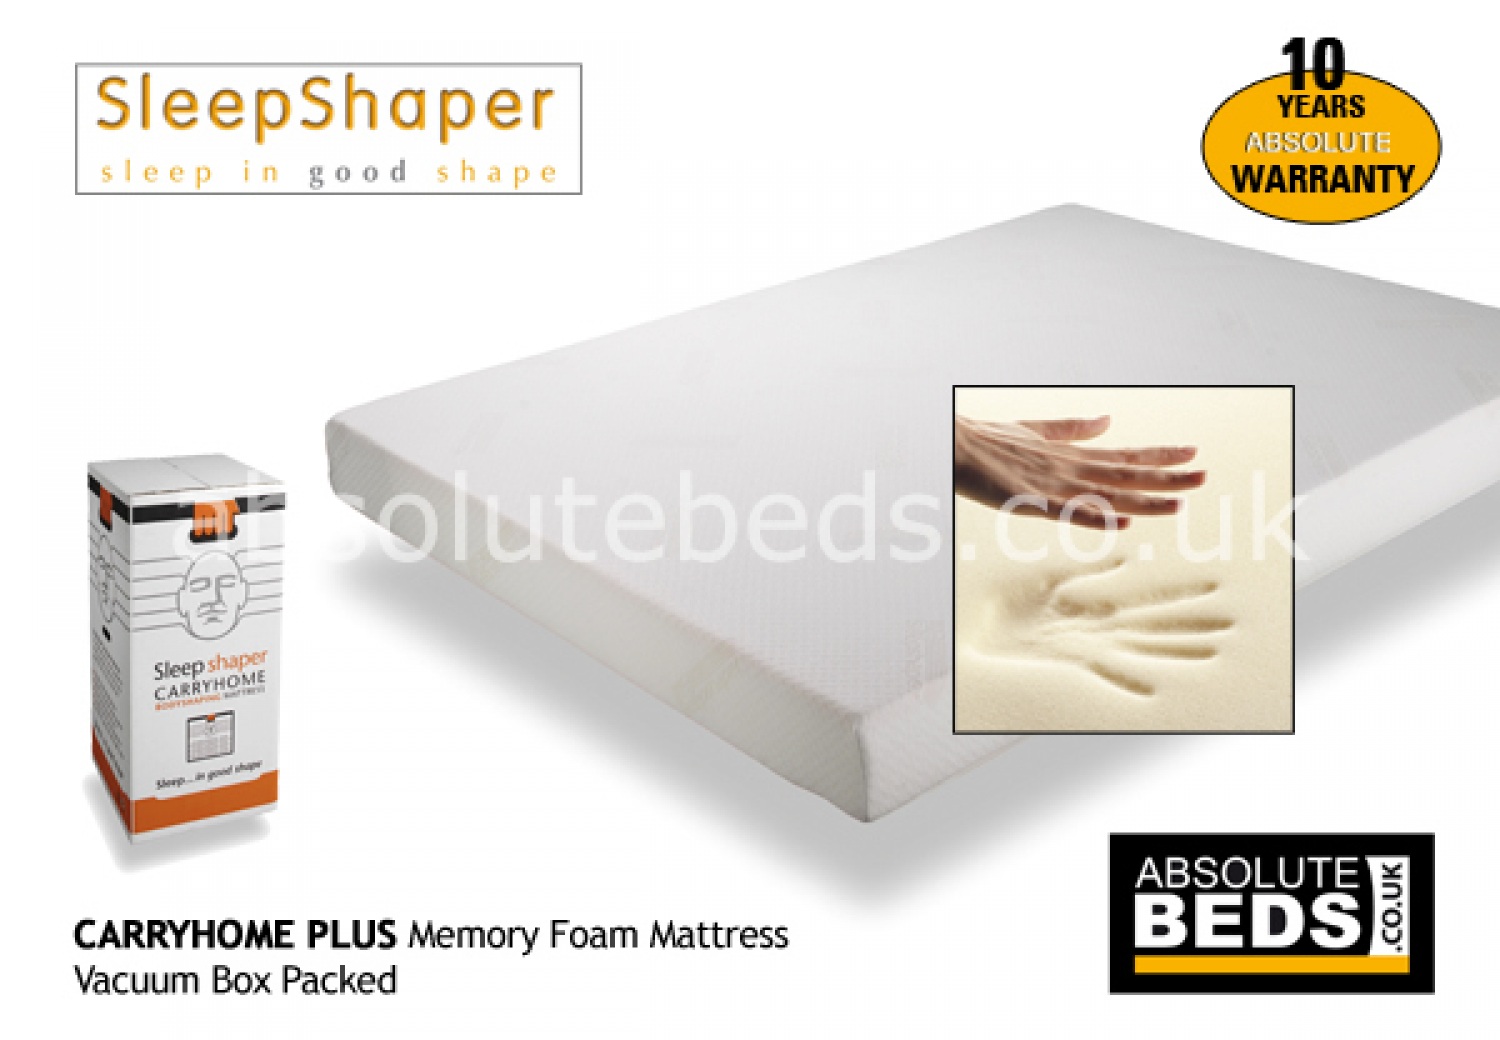 Sleepshaper CarryHome Plus Memory Foam Mattress image